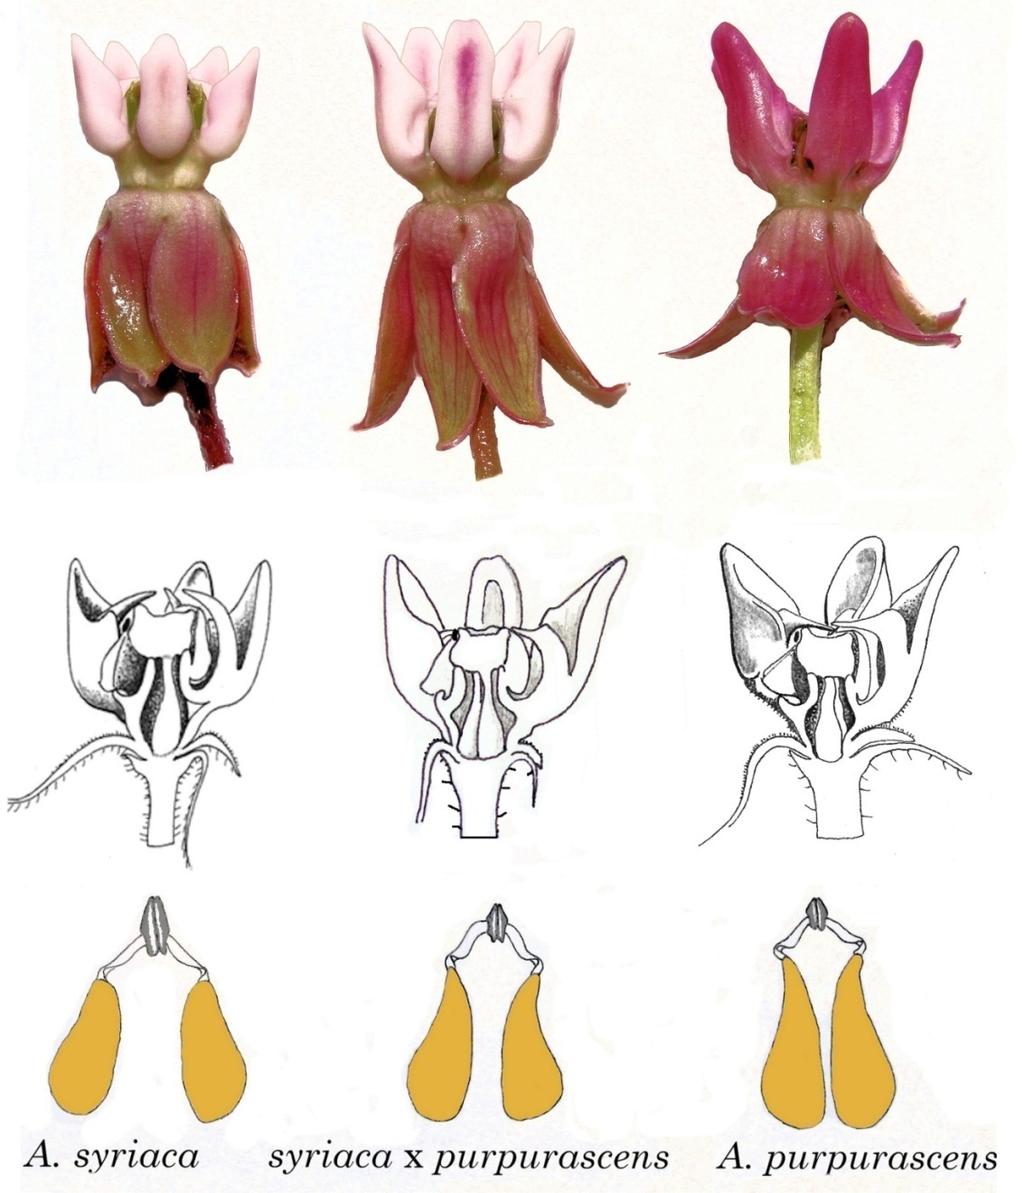 134 Phytologia (April 1, 2014) 96(2) Figure 3. Asclepias syriaca x A. purpurascens. A comparison of the three flowers.